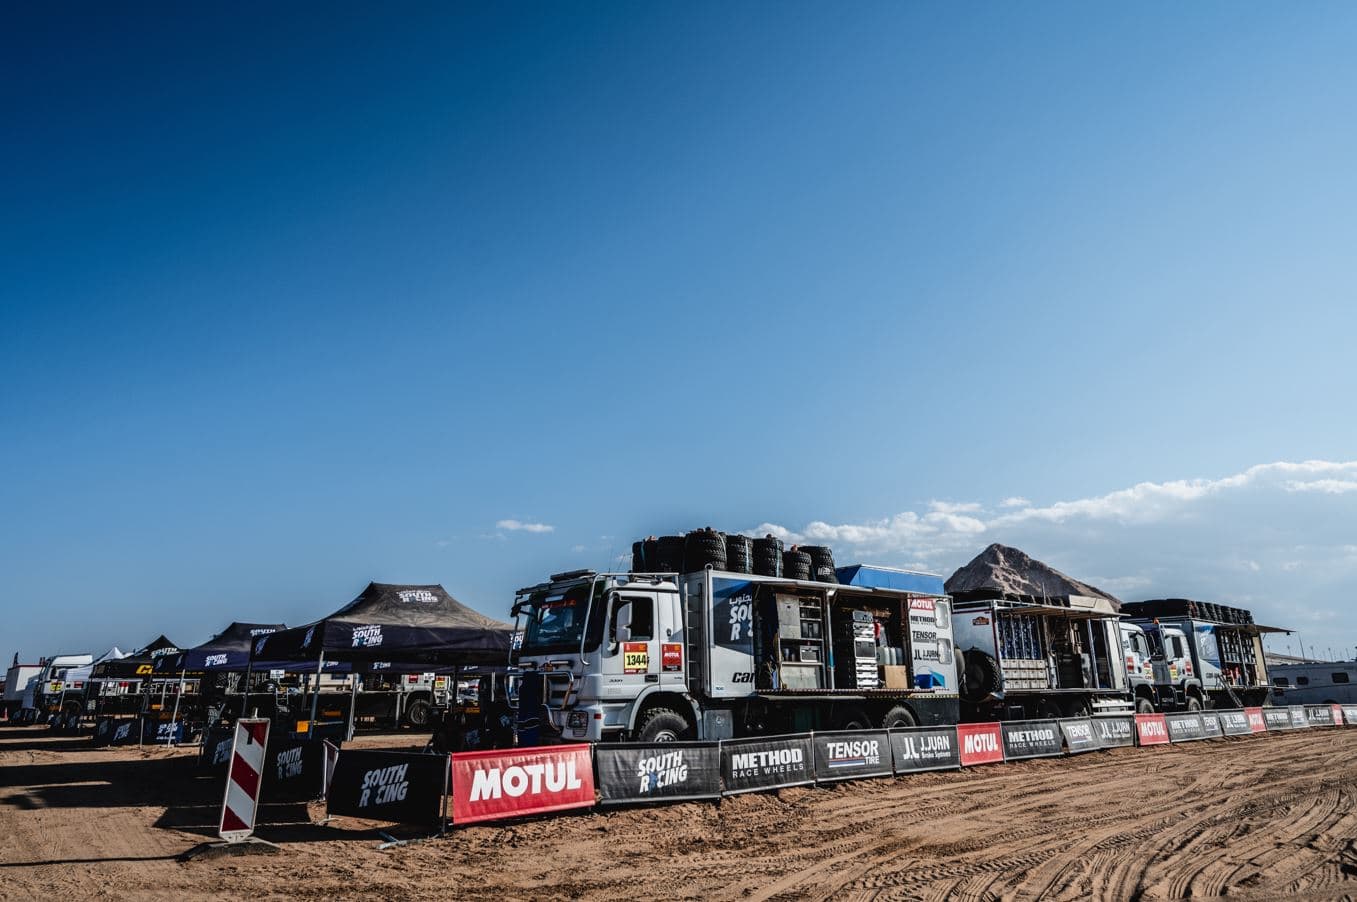 J.Juan Brakes was successful at the recent Dakar rally